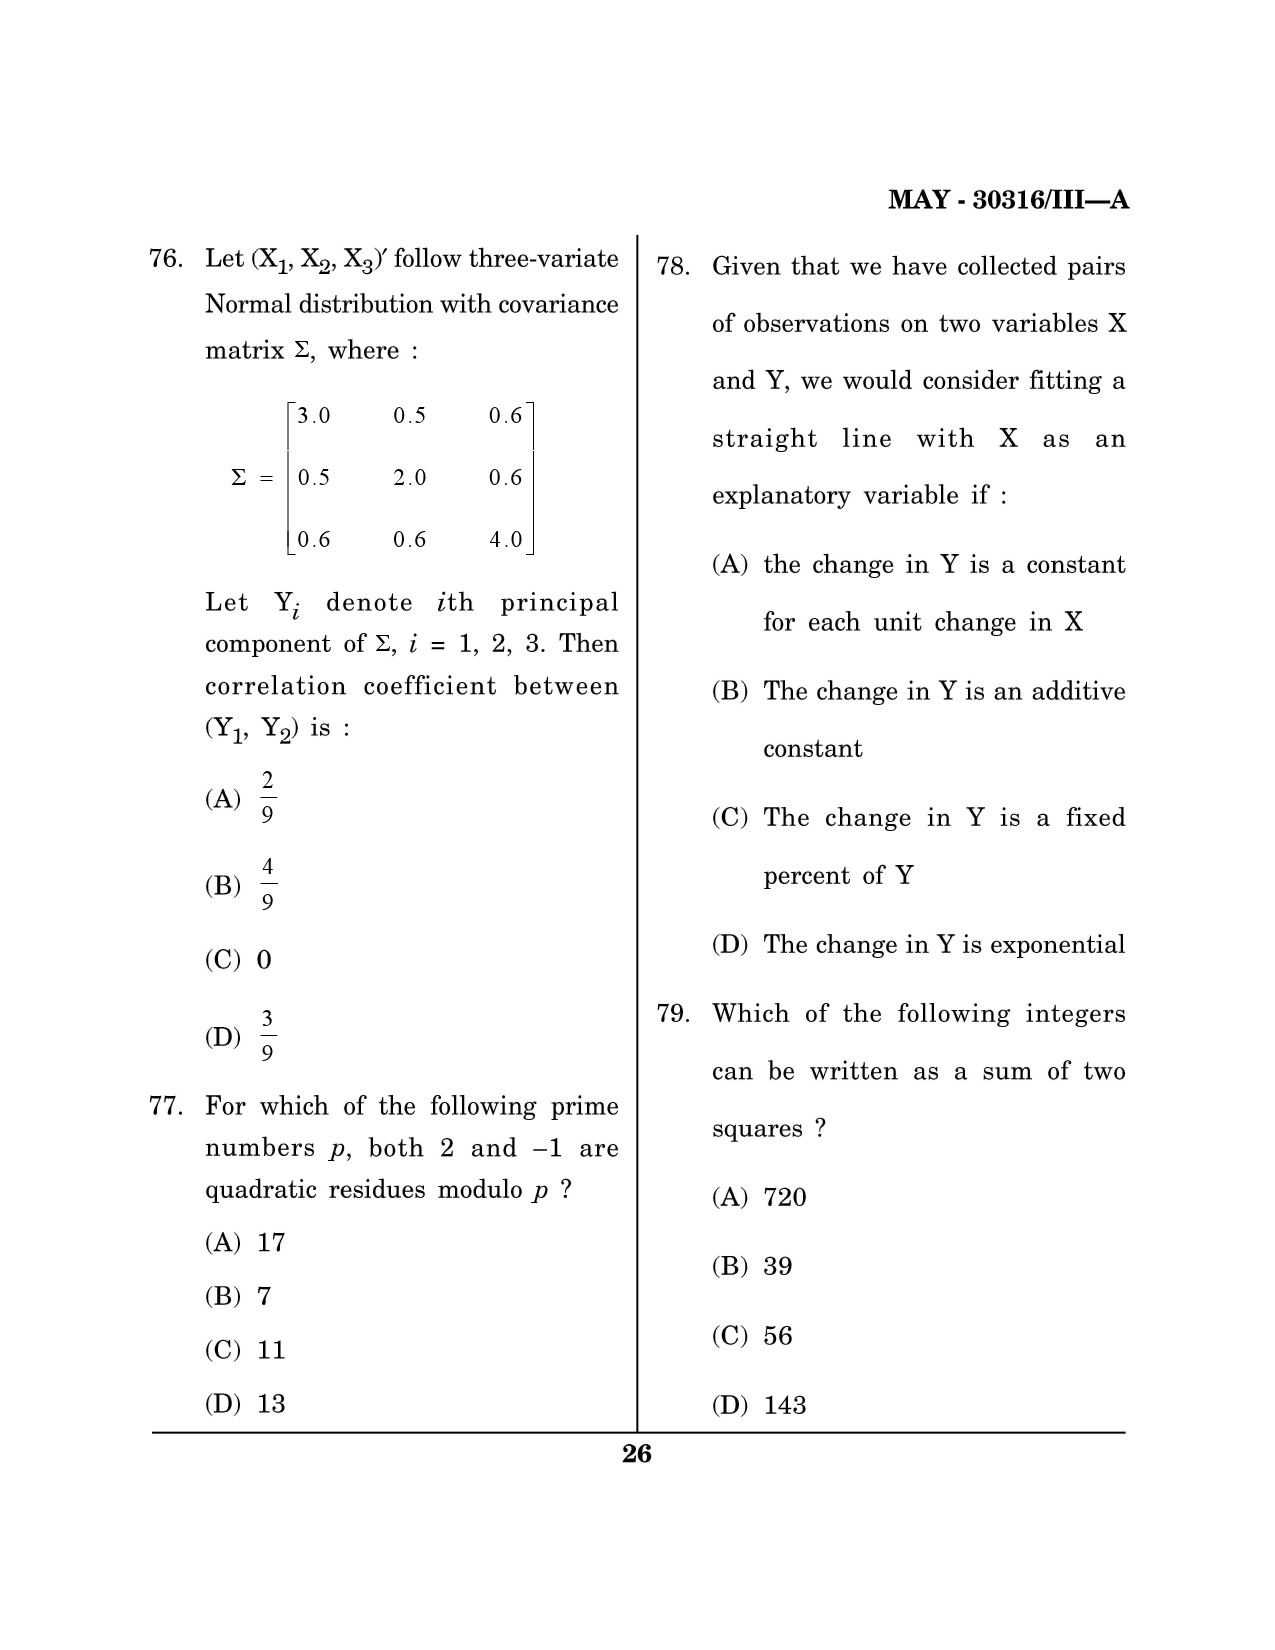 Maharashtra SET Mathematical Sciences Question Paper III May 2016 25